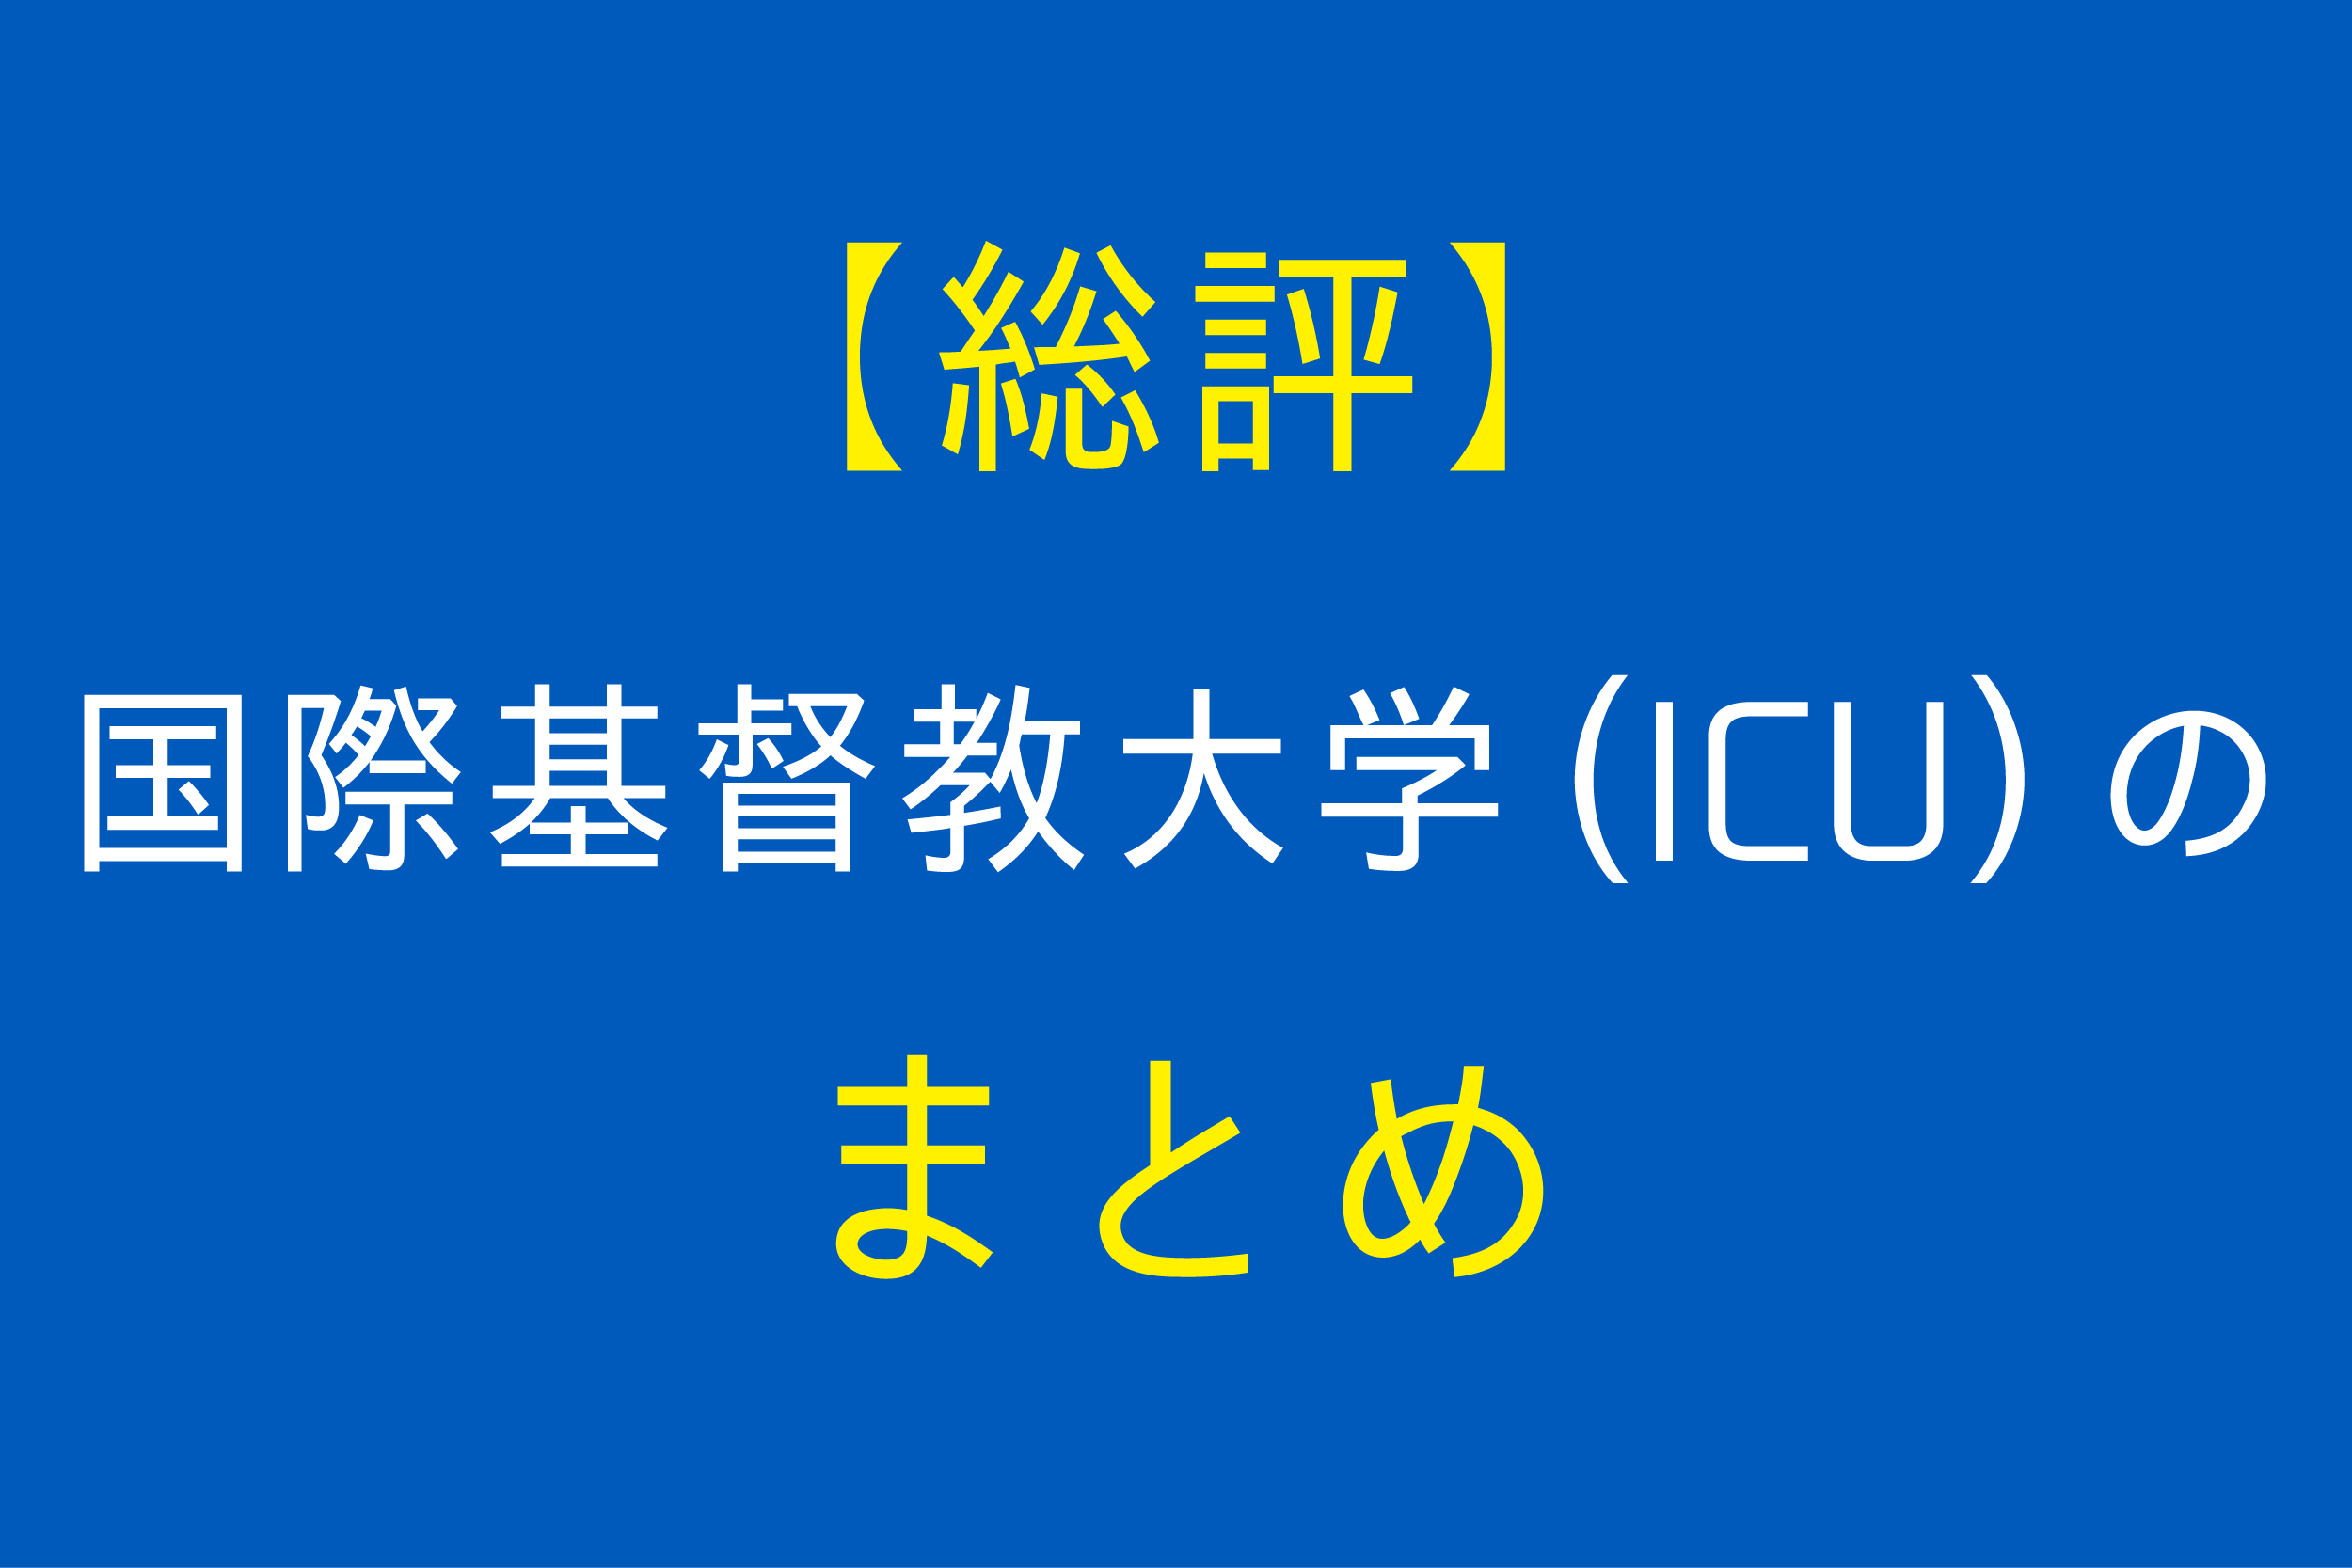 最新版 国際基督教大学 Icu の偏差値や倍率 入試対策を徹底解剖 Studysearch